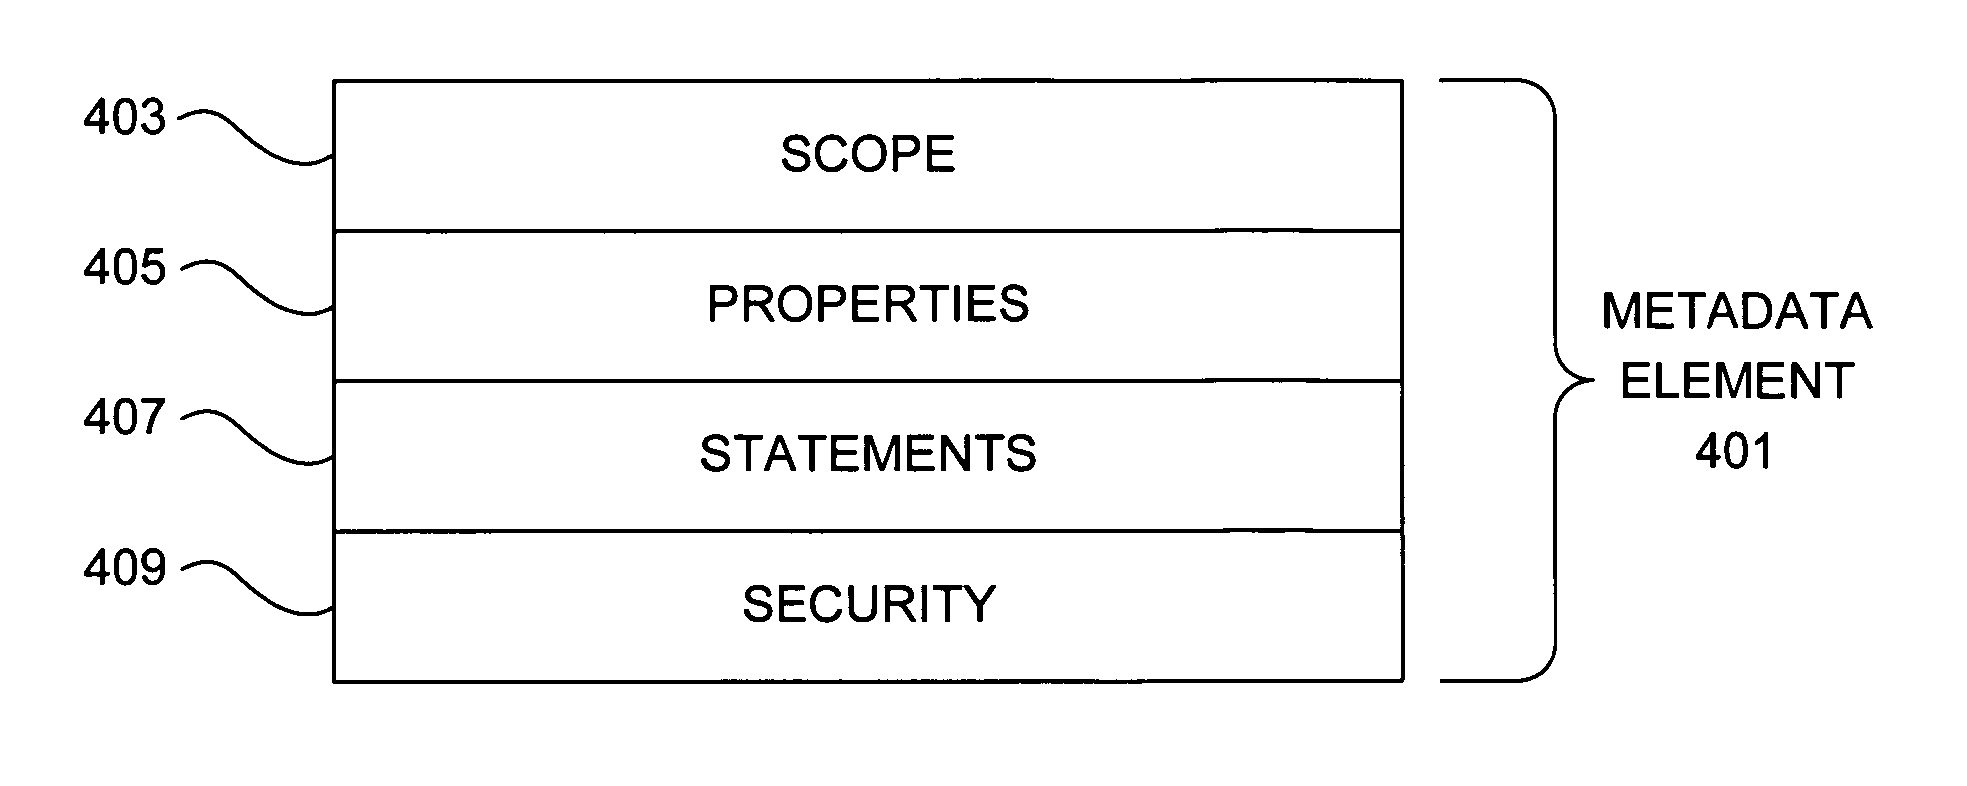 Scoped access control metadata element